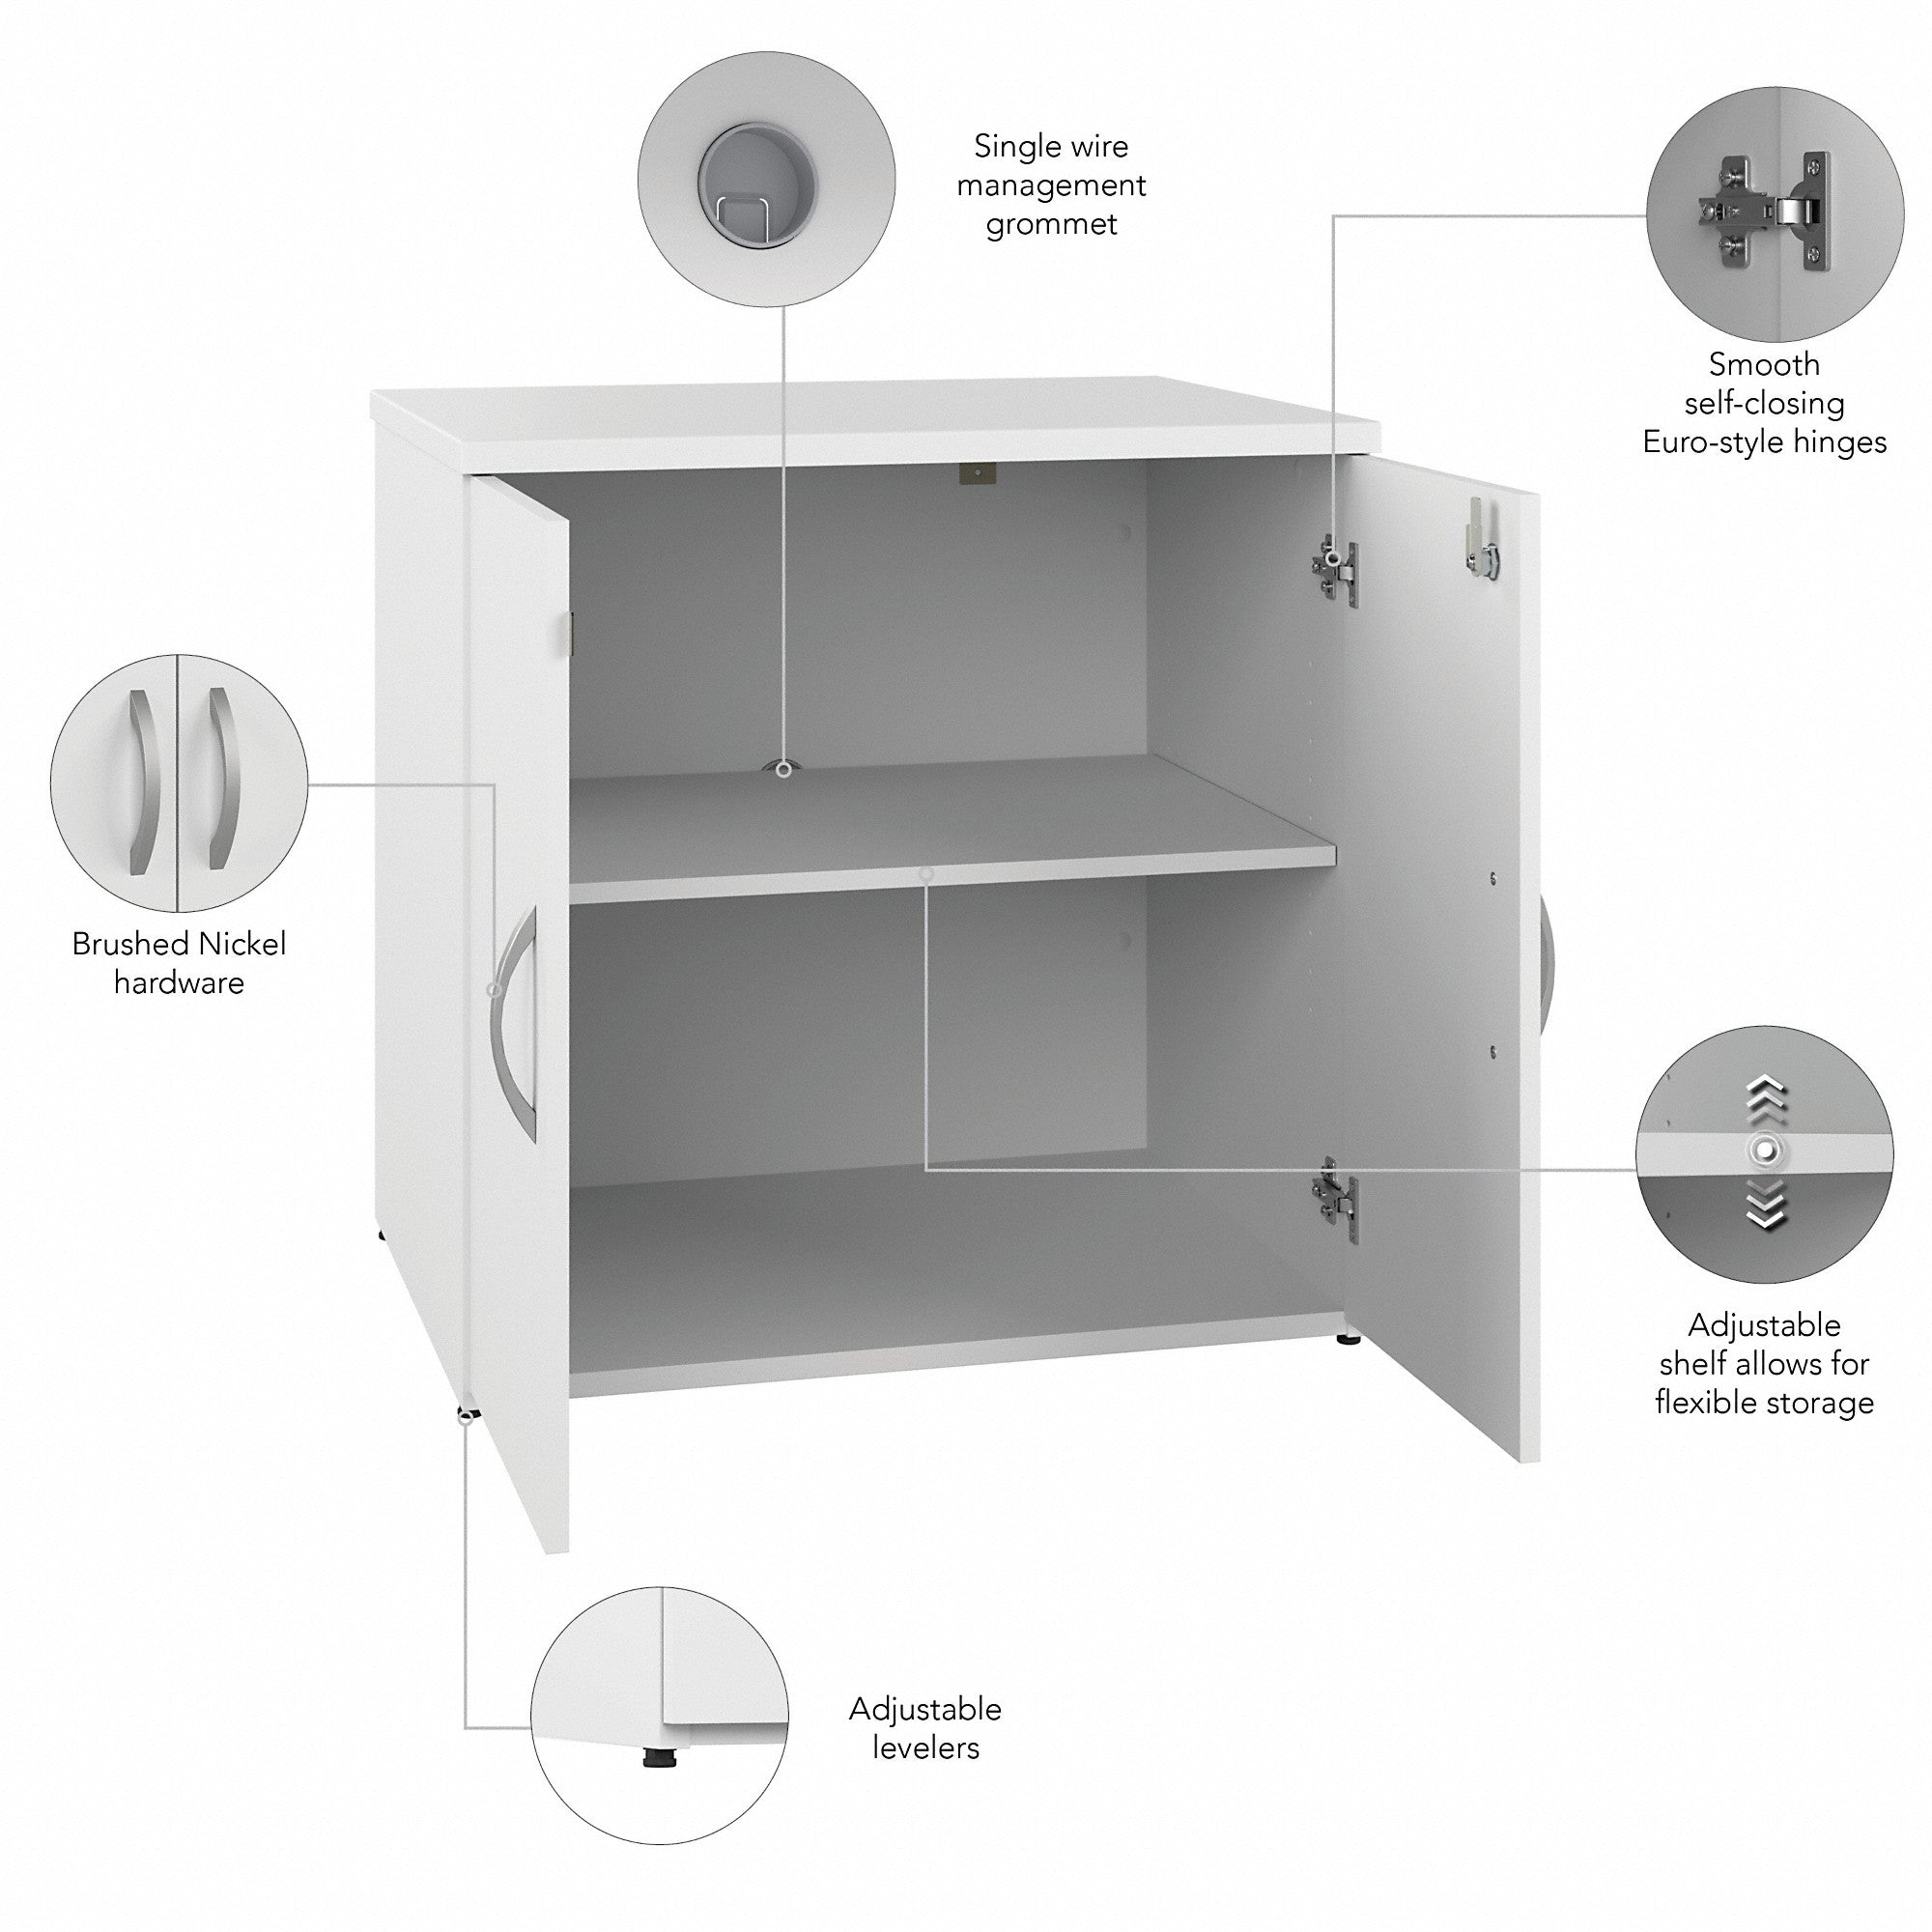 Bush Business Furniture Studio C Office Storage Cabinet with Doors